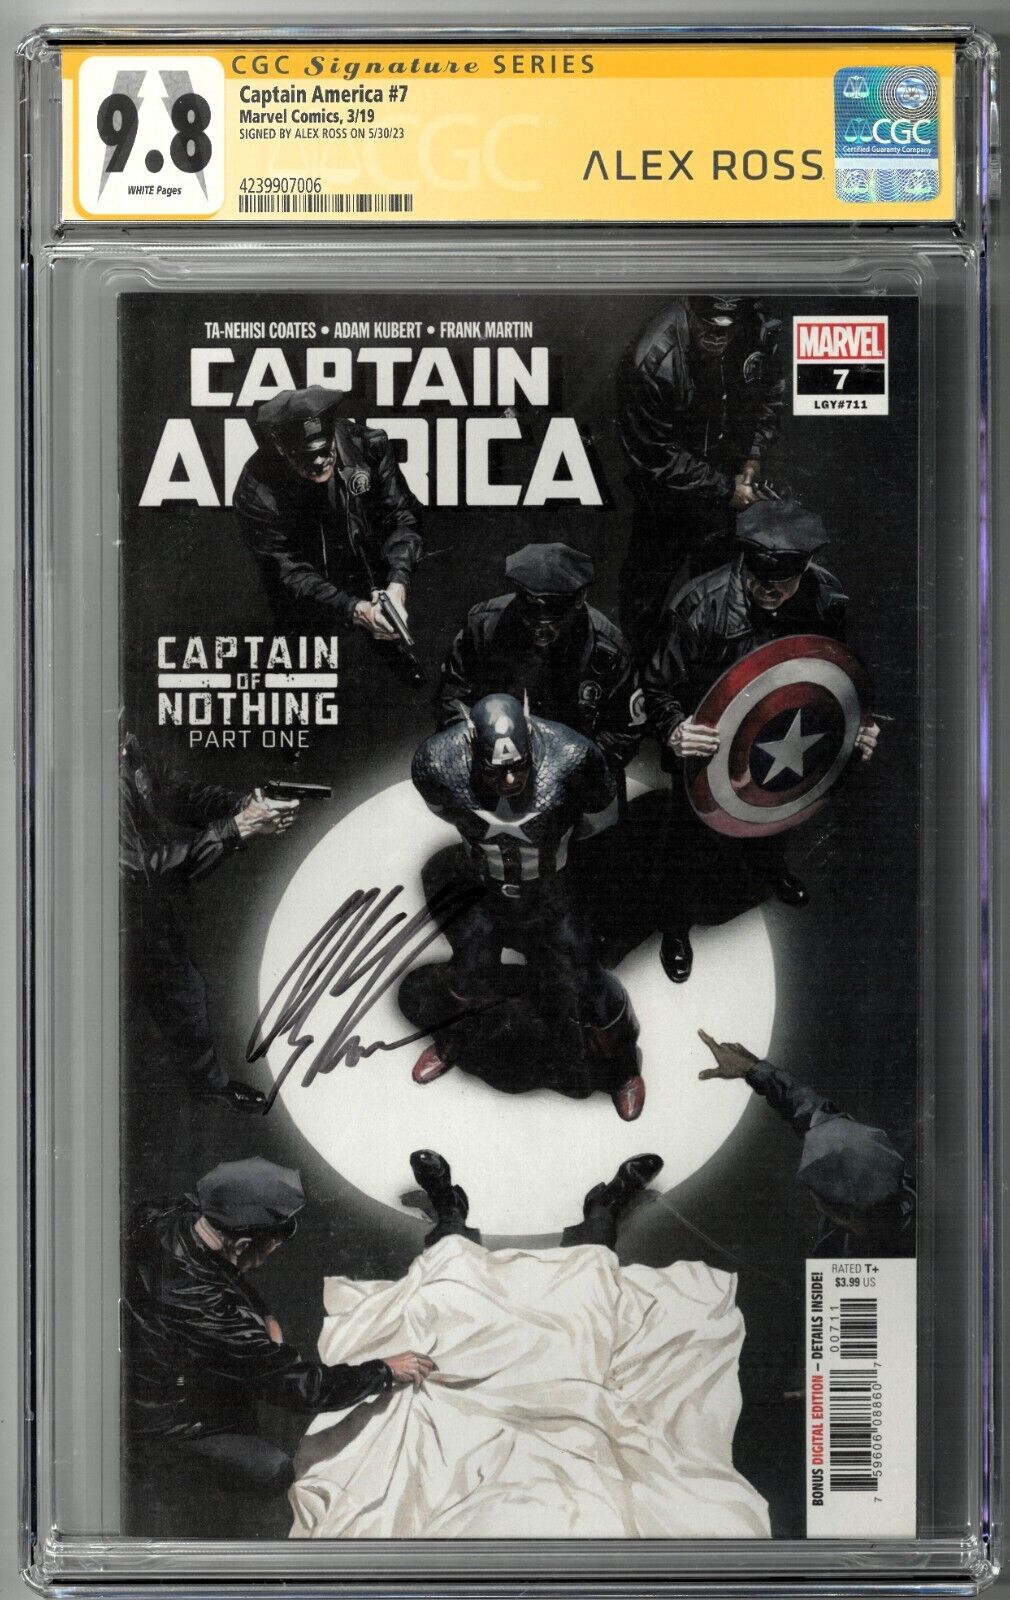 Captain America #7 CGC SS 9.8 (Mar 2019, Marvel) Signed by Alex Ross, Echo app.